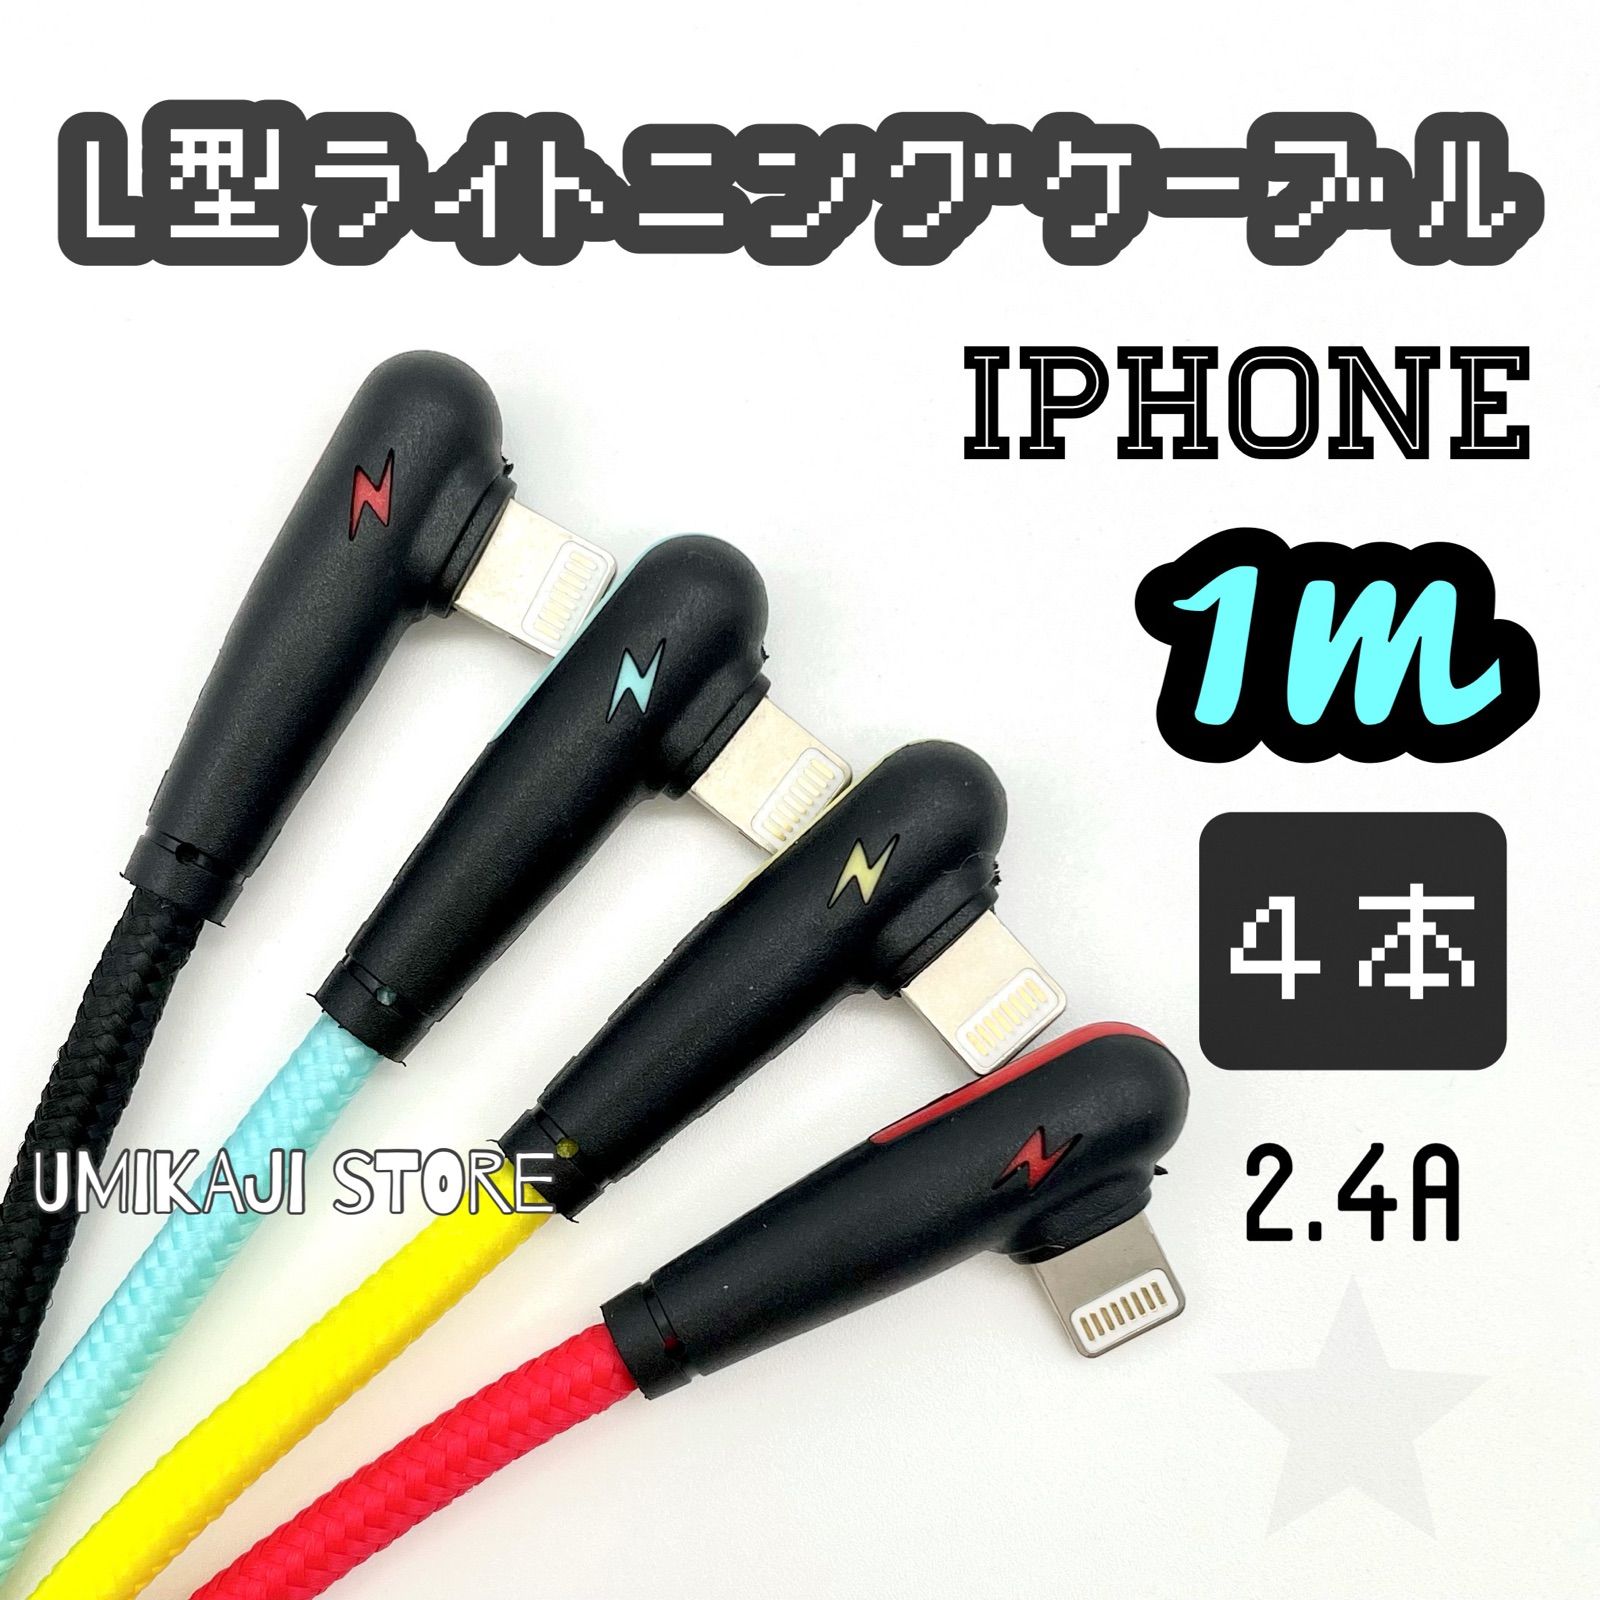 iPhone ライトニング ケーブル L型 2.4A 2m 4色セット www.spf.com.uy